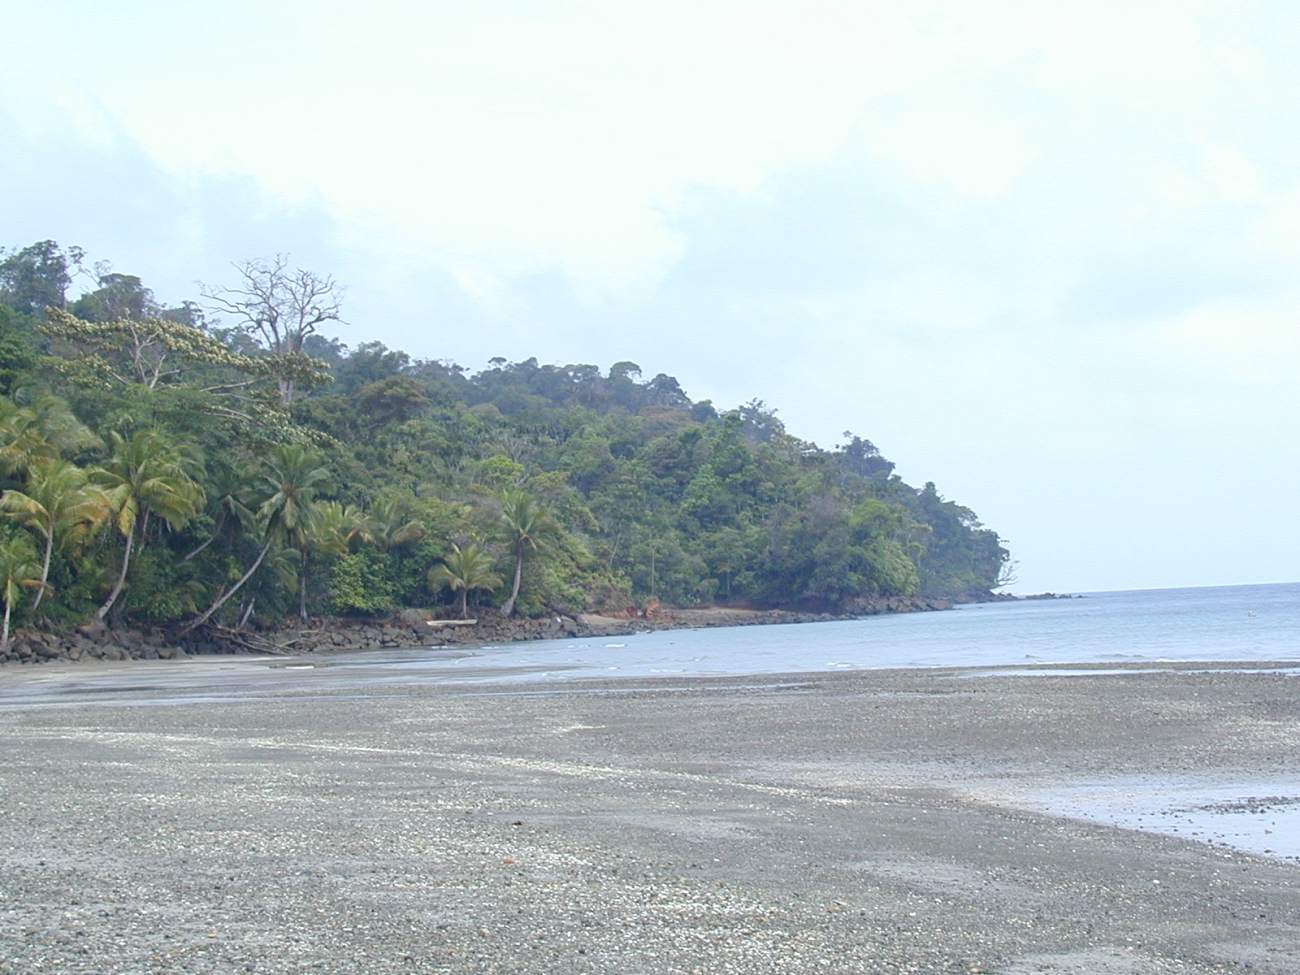 The beach at Isla Gorgona